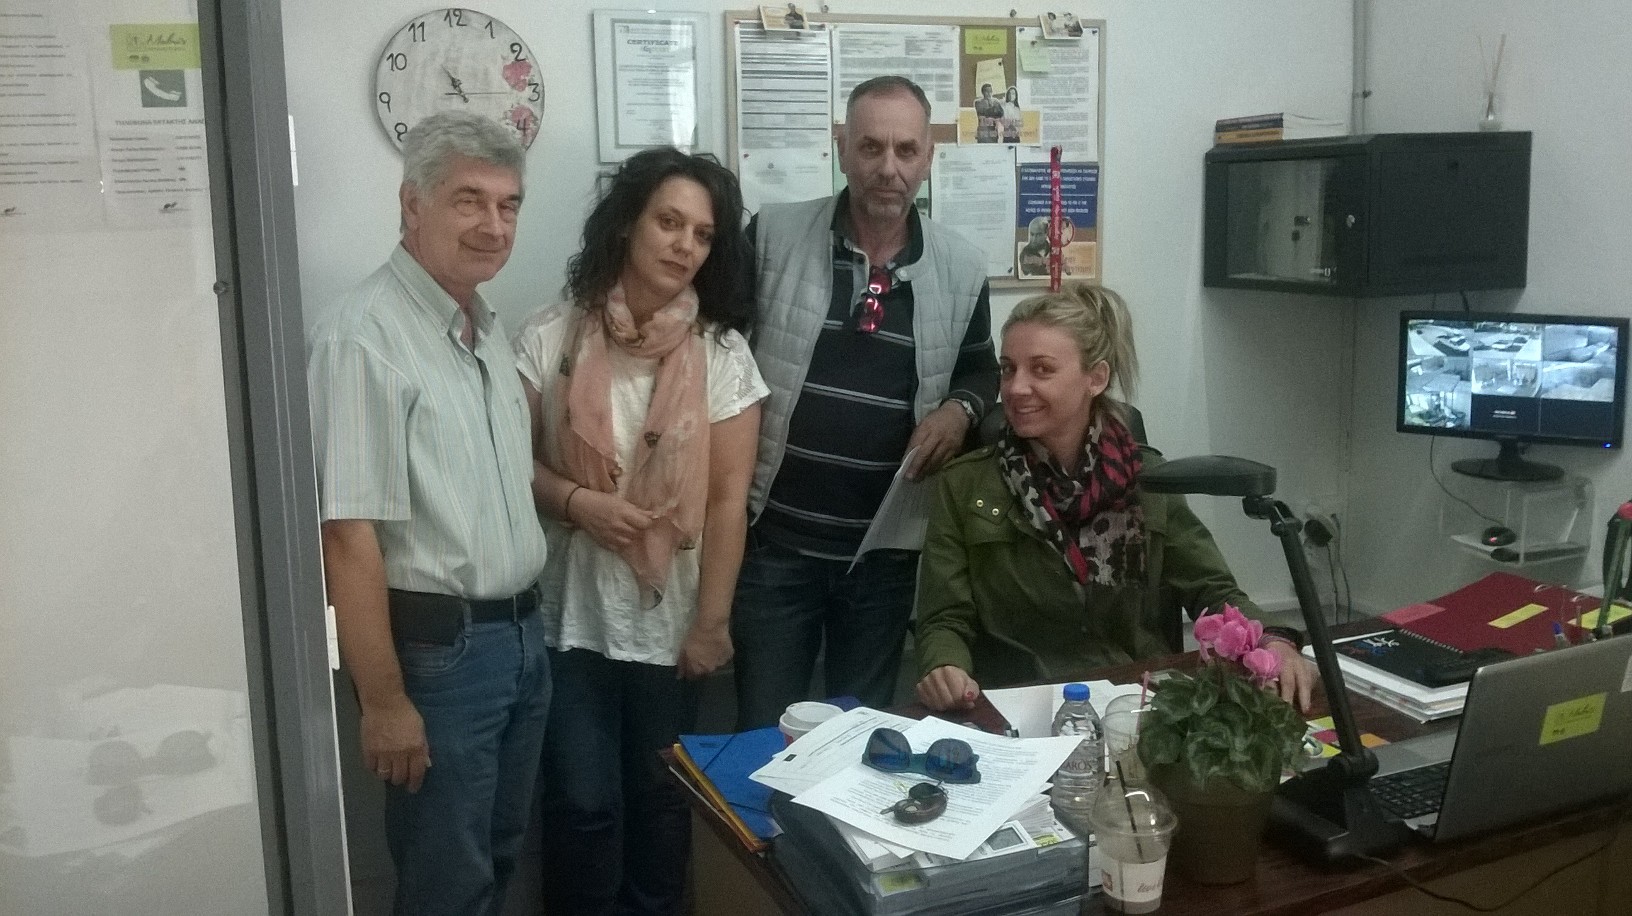 Association of Pistachio Producers of Makri, Fthiotida (Mr. S. Gallis, Dr. M. Doula, Mr. M. Mpourgos, Ms. V. Zerva)